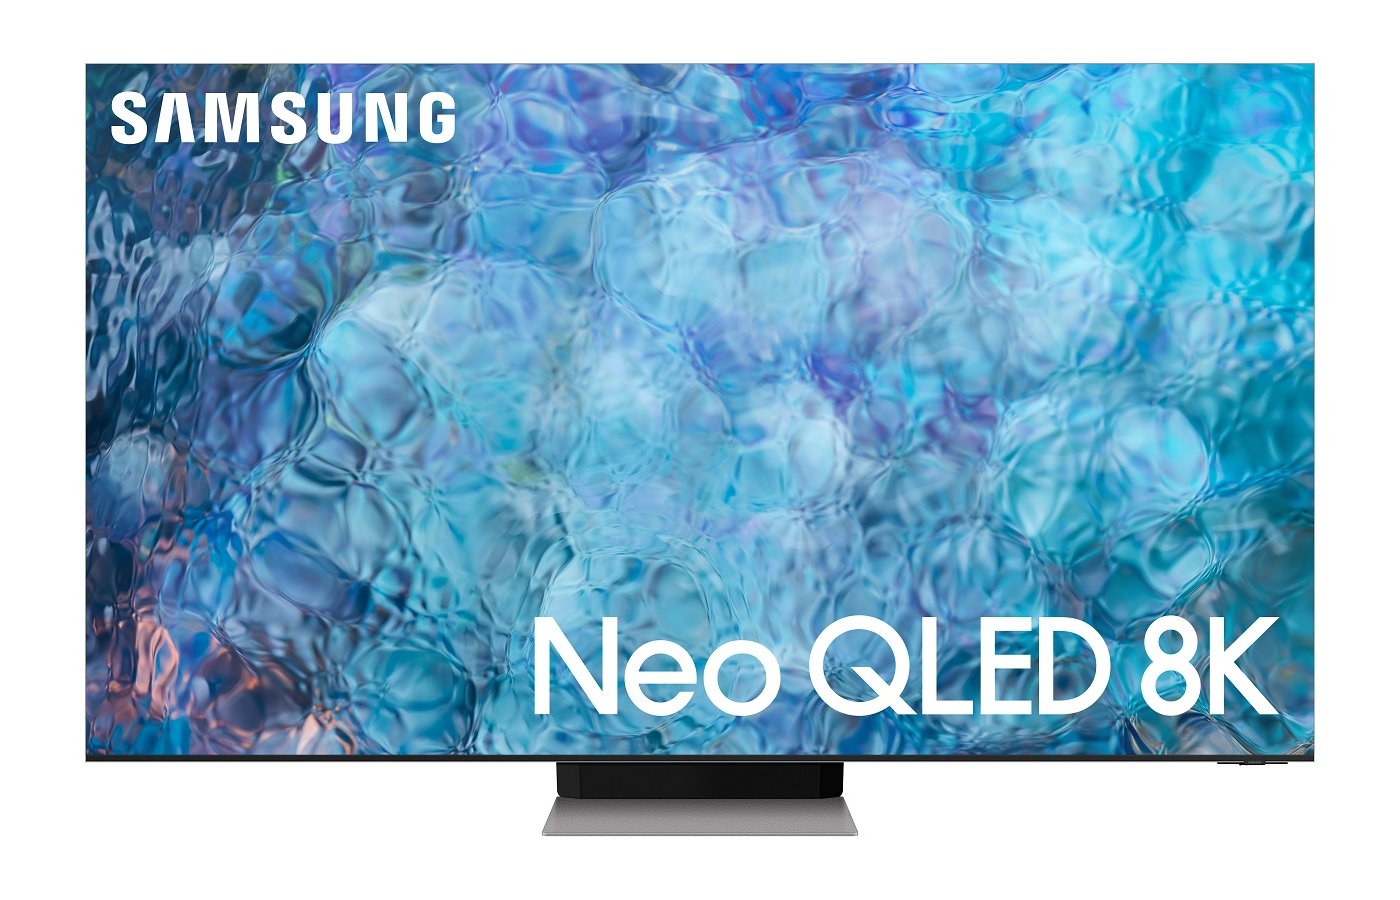 Samsung 8k купить. Samsung Neo QLED. Samsung Neo qn900a. Samsung Neo QLED 8k qn900a. Qn900a Neo QLED 8k Smart TV 2021.